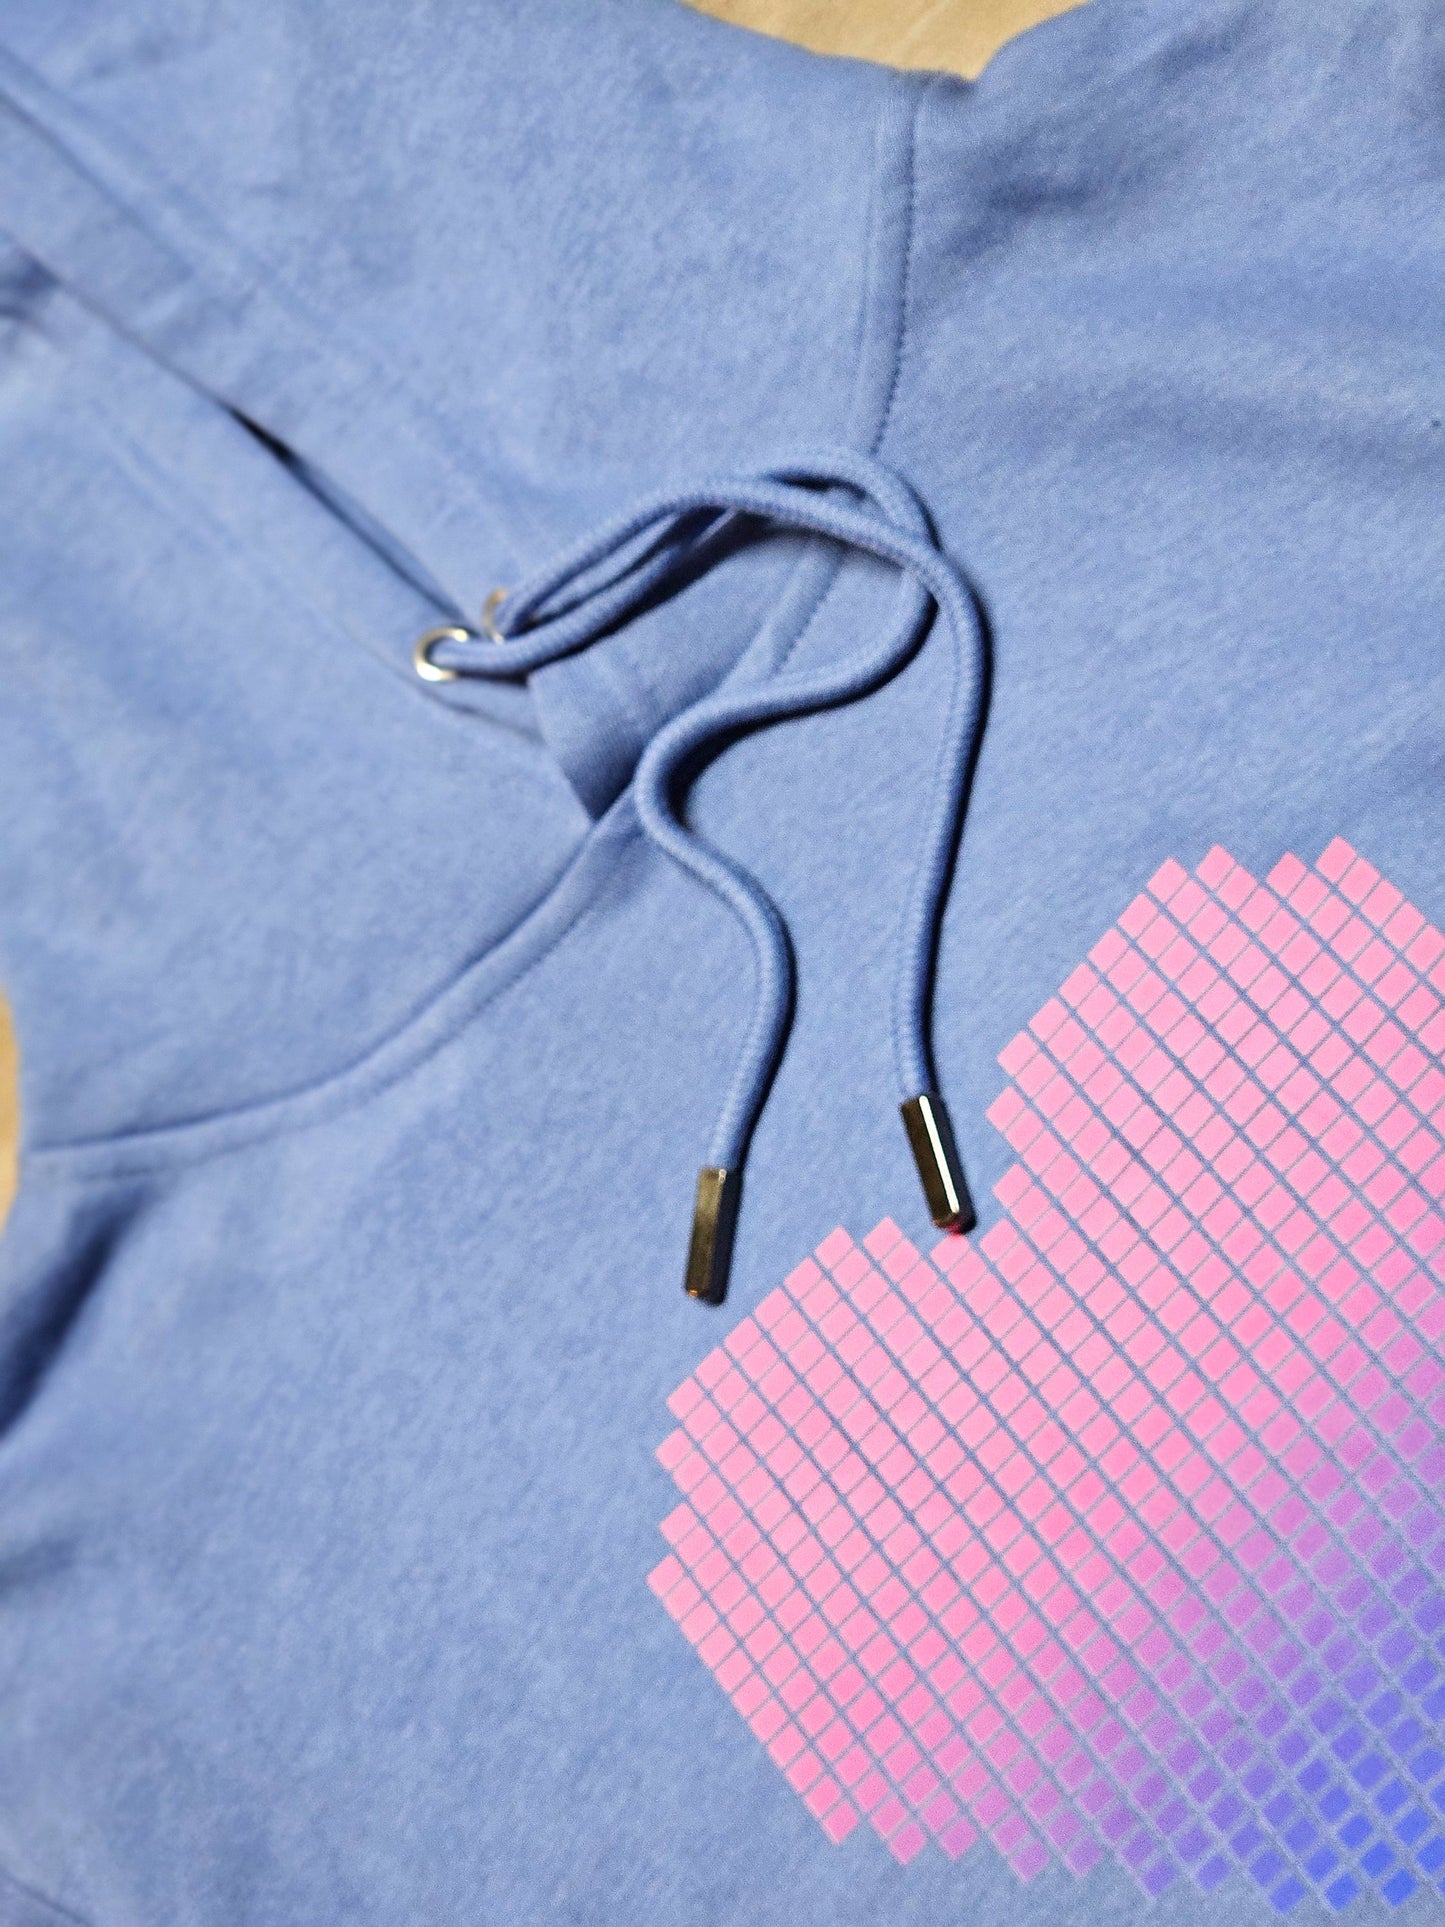 Pixel Heart Pullover Hoodie - Sweatshirt, 90s Y2K, Dreamcore, Candycore, Self Care, Pastel Soft Girl, Streetwear Unisex Kawaii